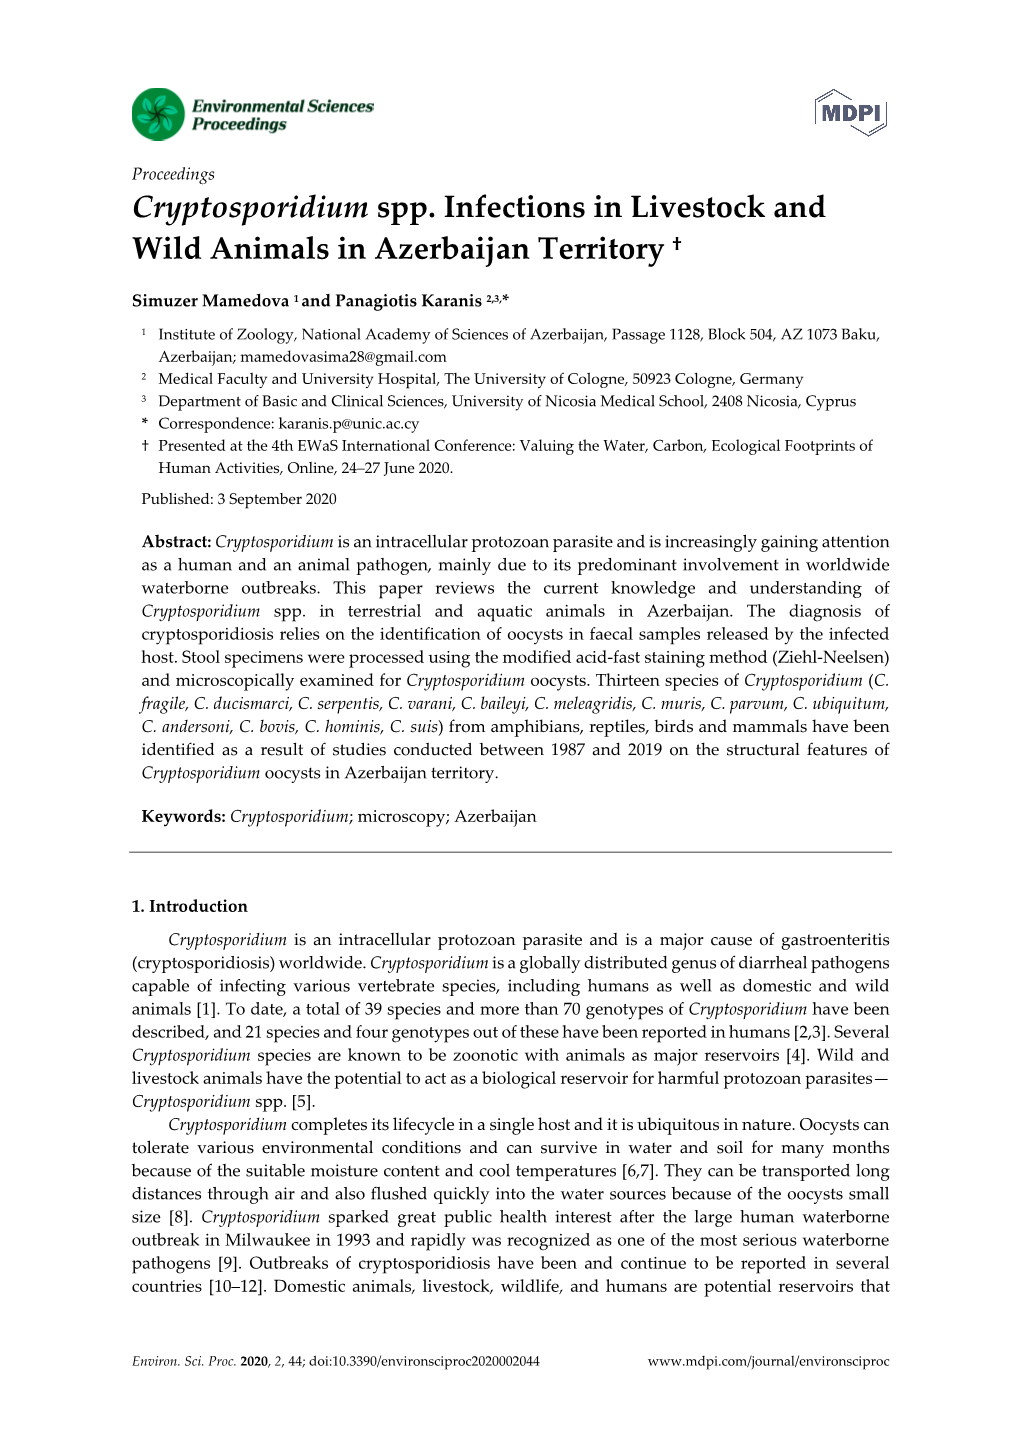 Cryptosporidium Spp. Infections in Livestock and Wild Animals in Azerbaijan Territory †